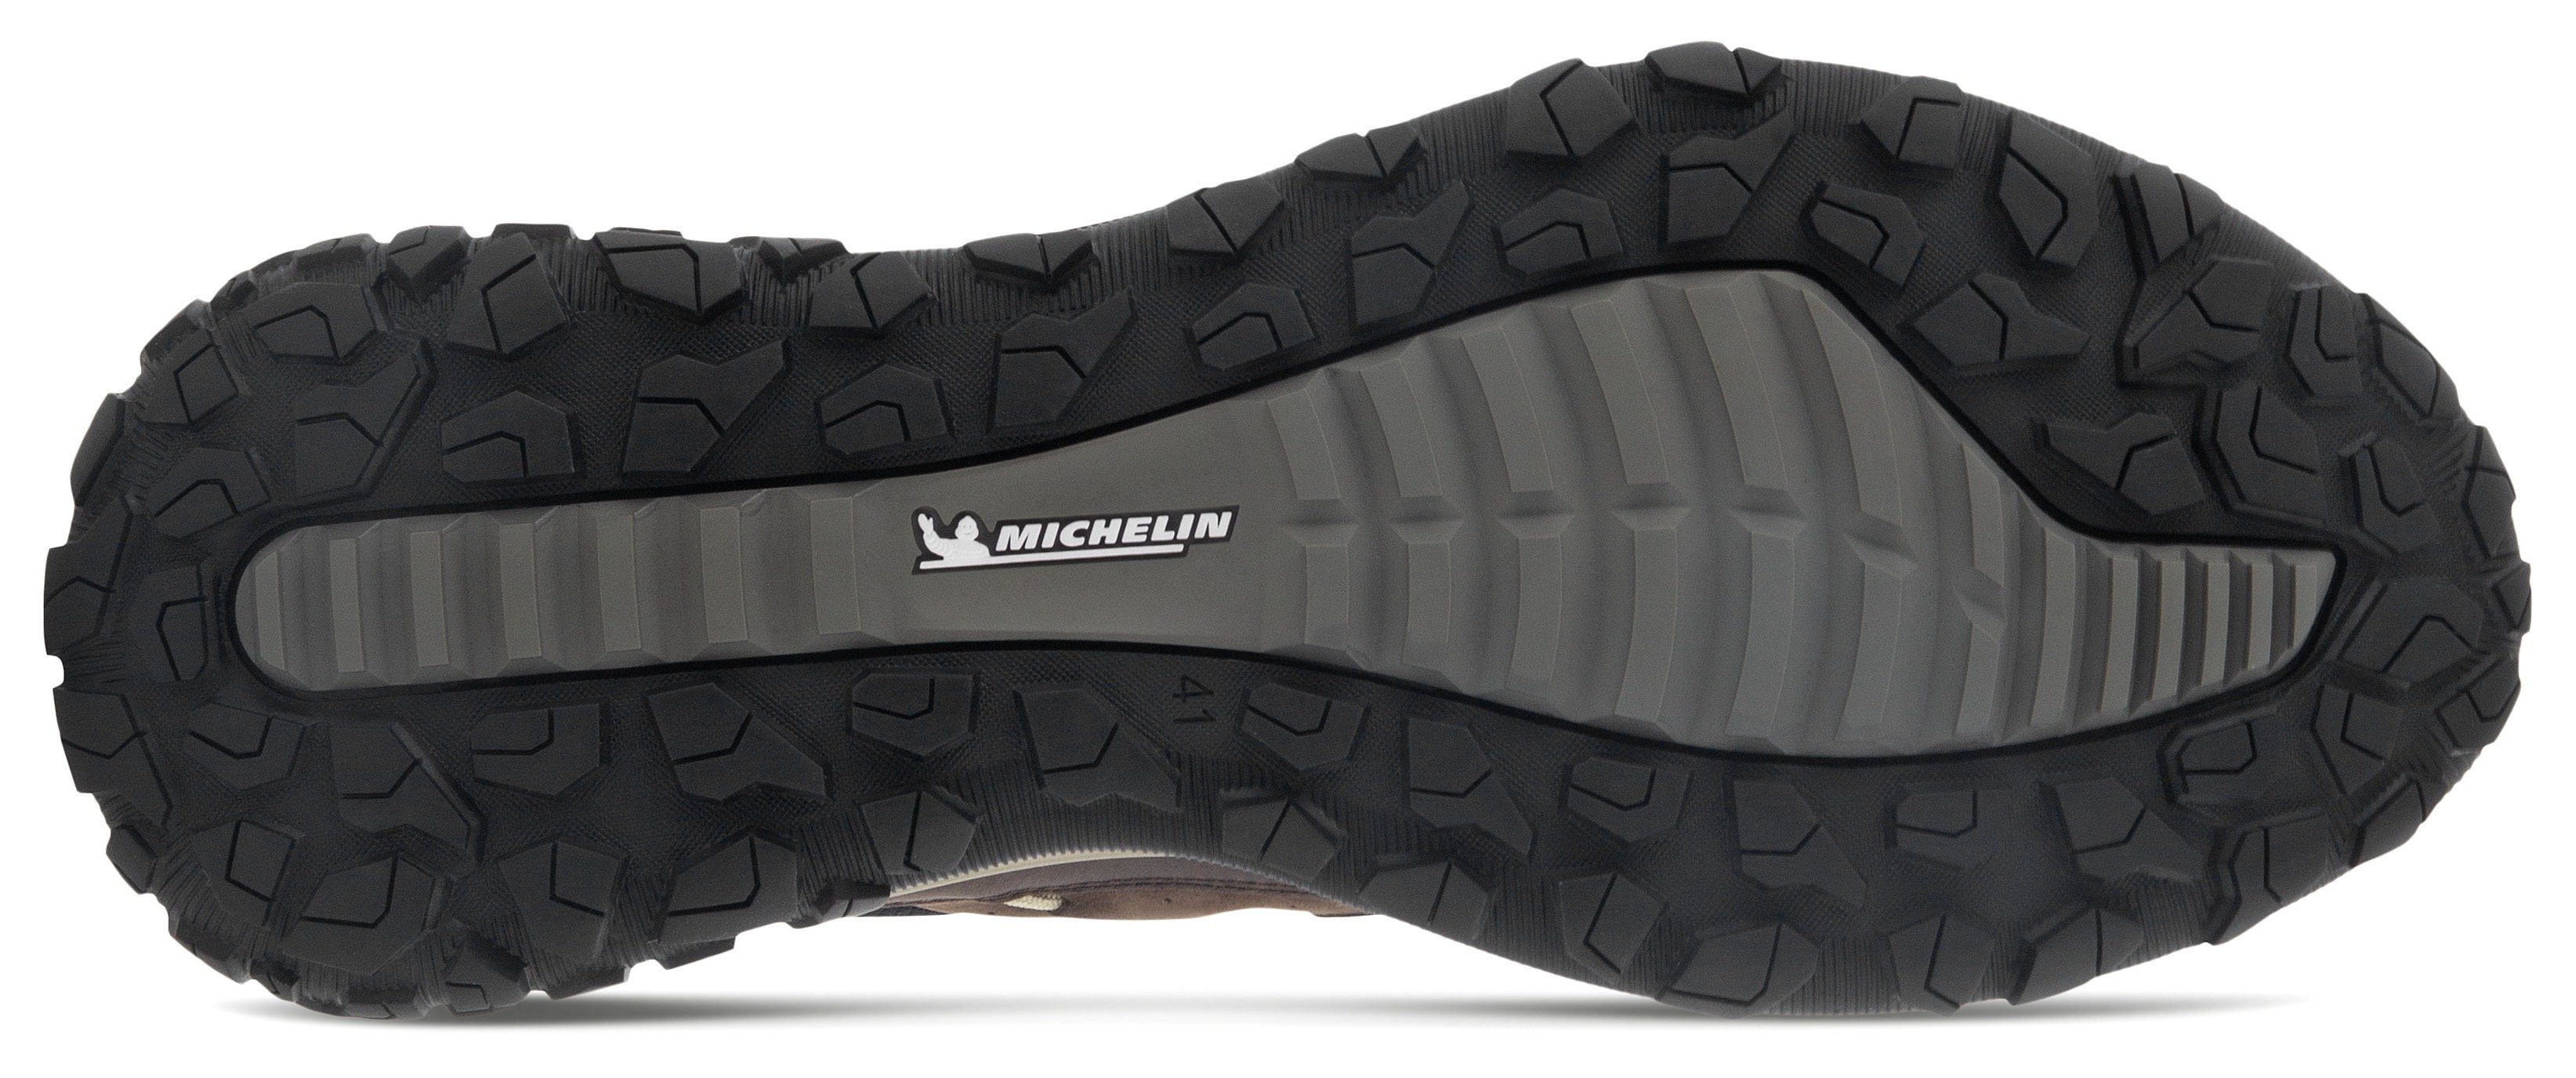 Ecco ULT-TRN Michelin-Laufsohle mit dunkelbraun profilierter Sneaker M